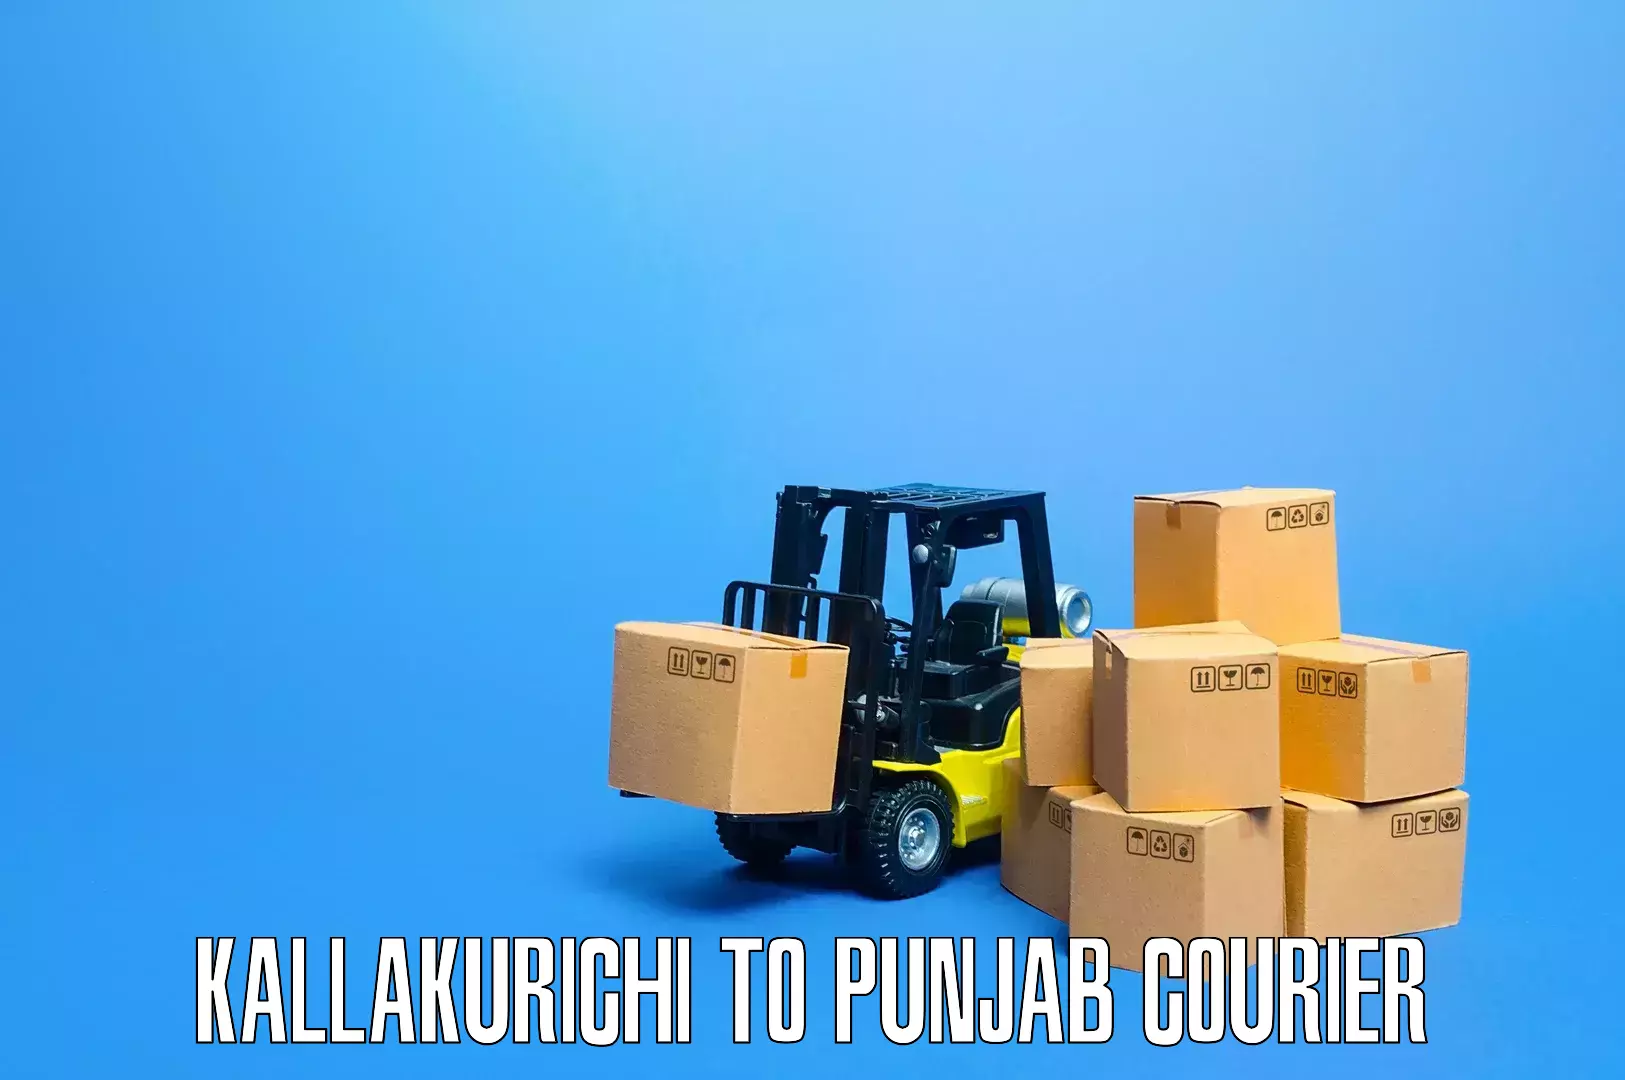 Professional movers Kallakurichi to Punjab